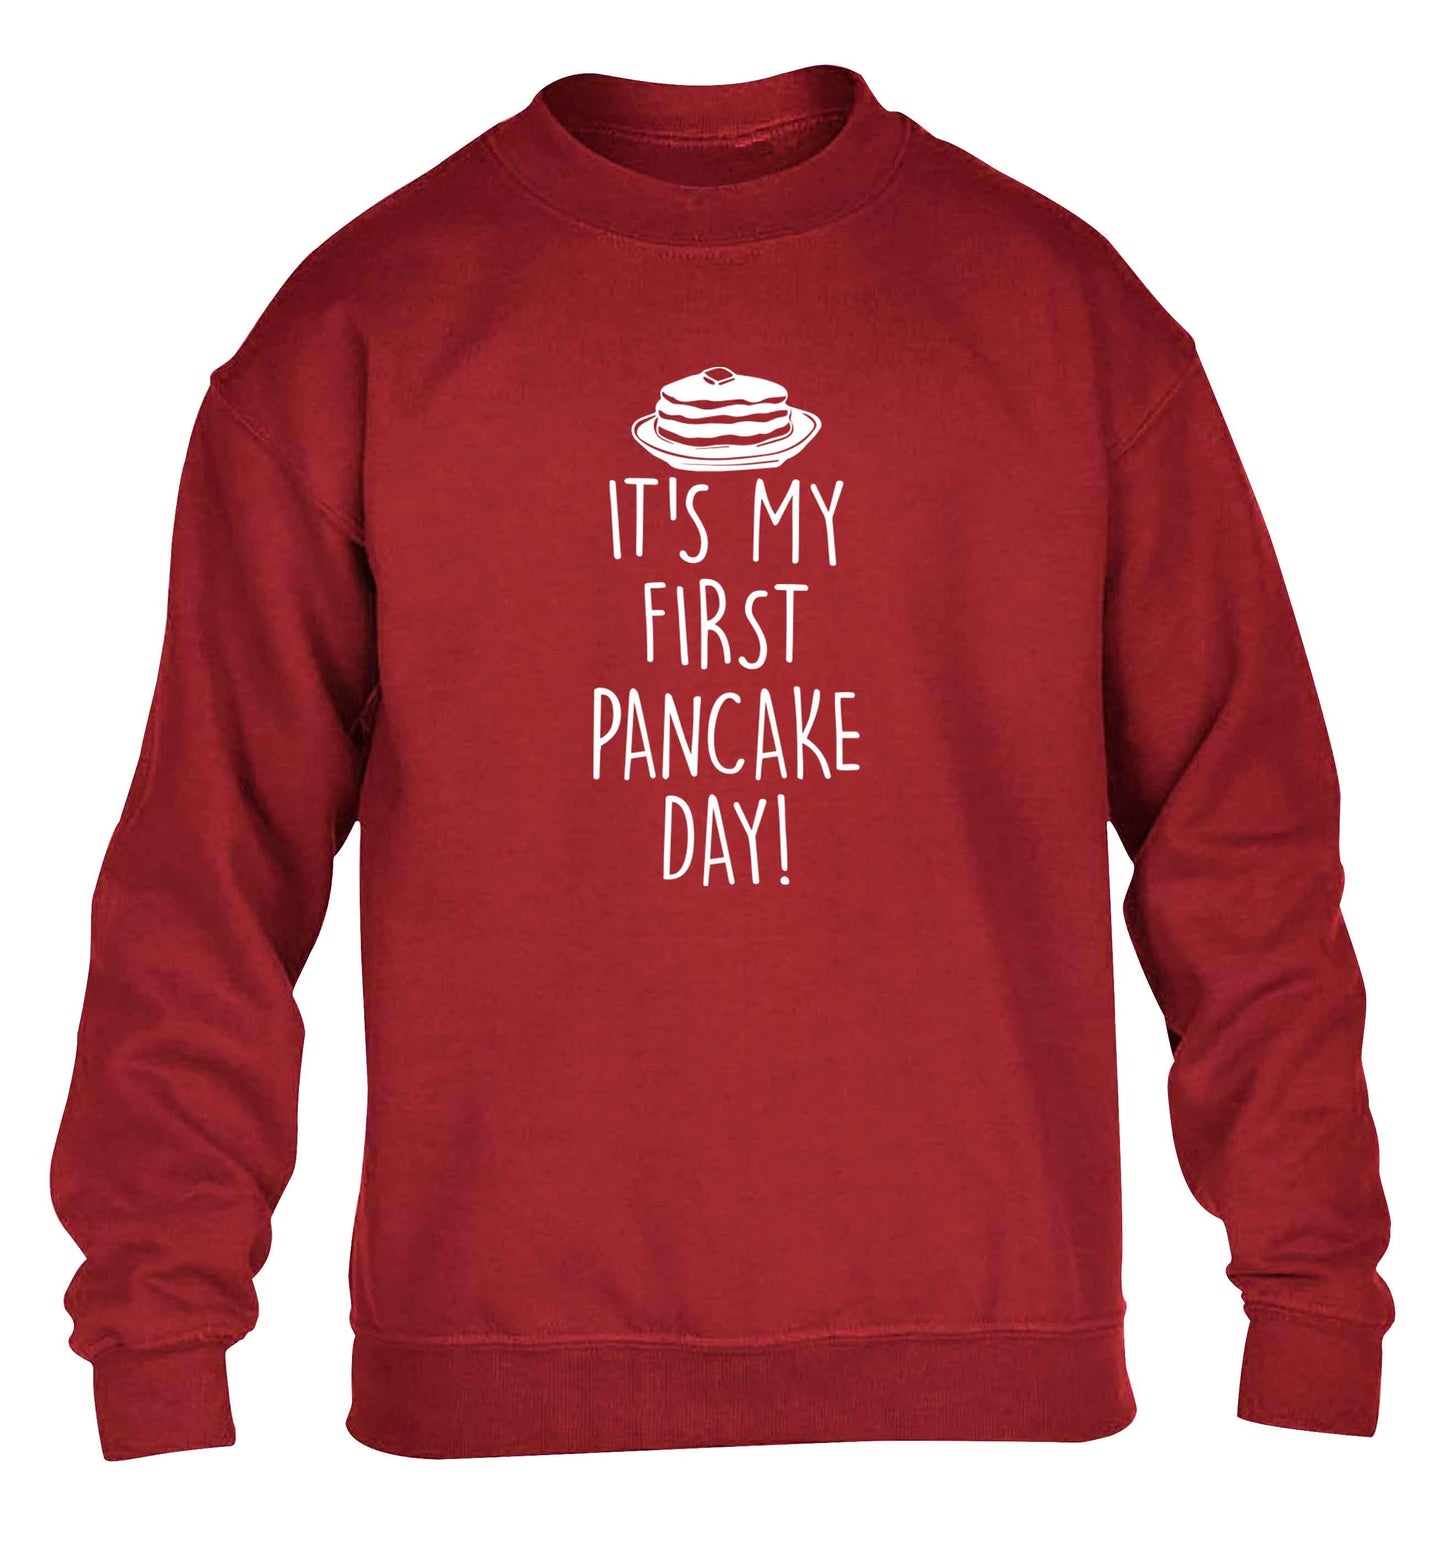 It's my first pancake day children's grey sweater 12-13 Years